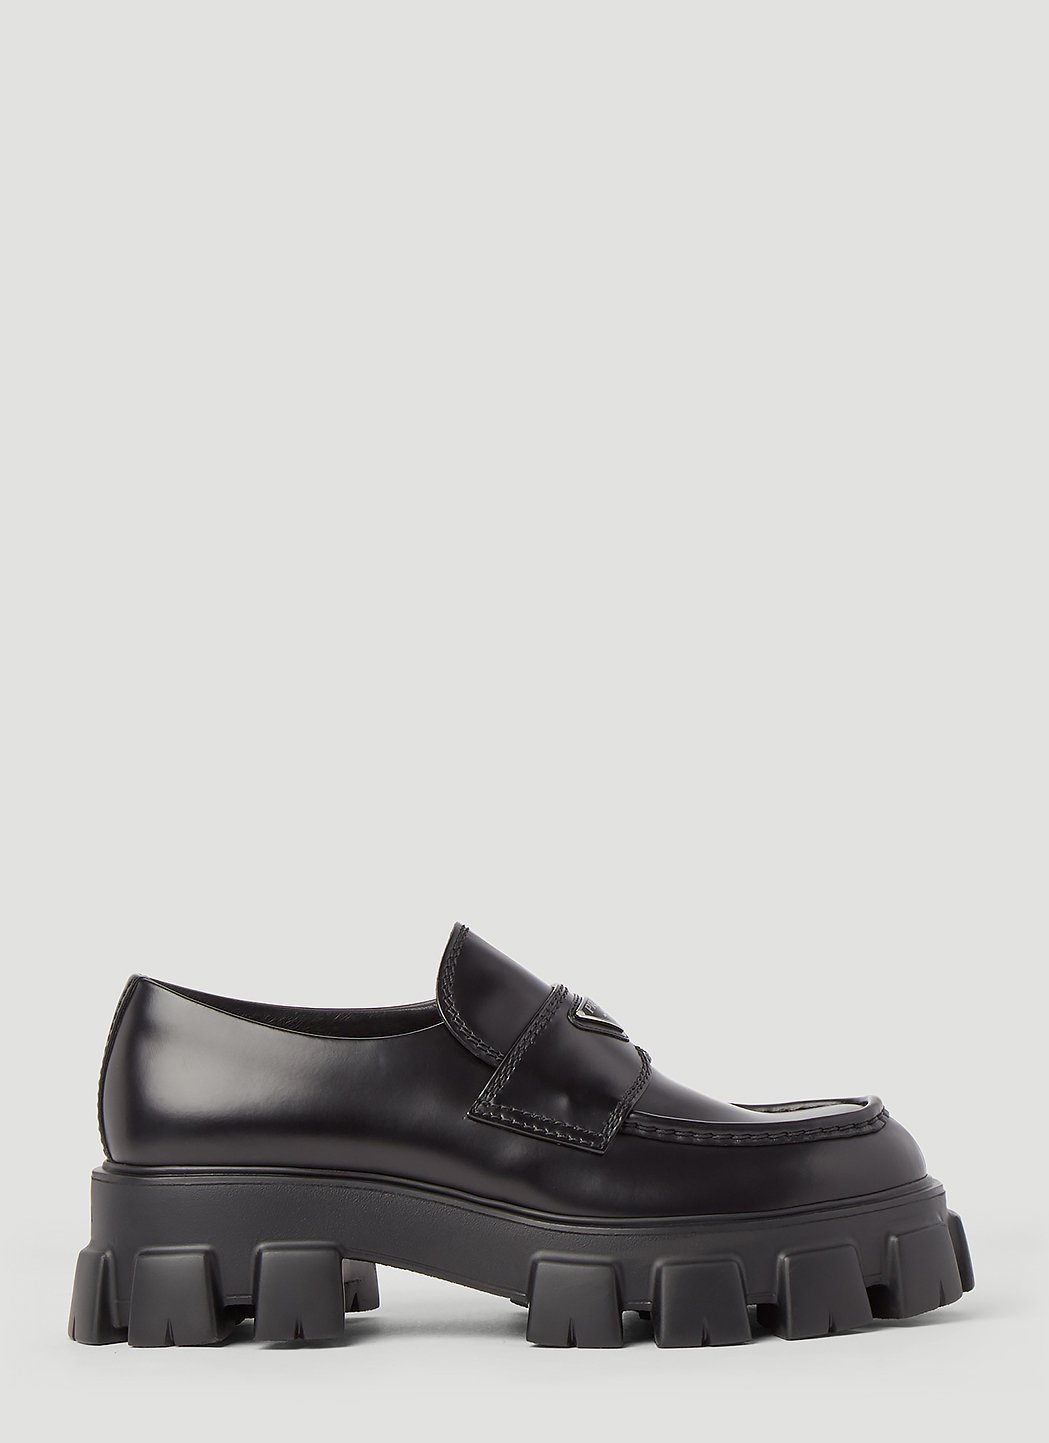 Prada Men's Monolith Leather Loafers in Black | LN-CC